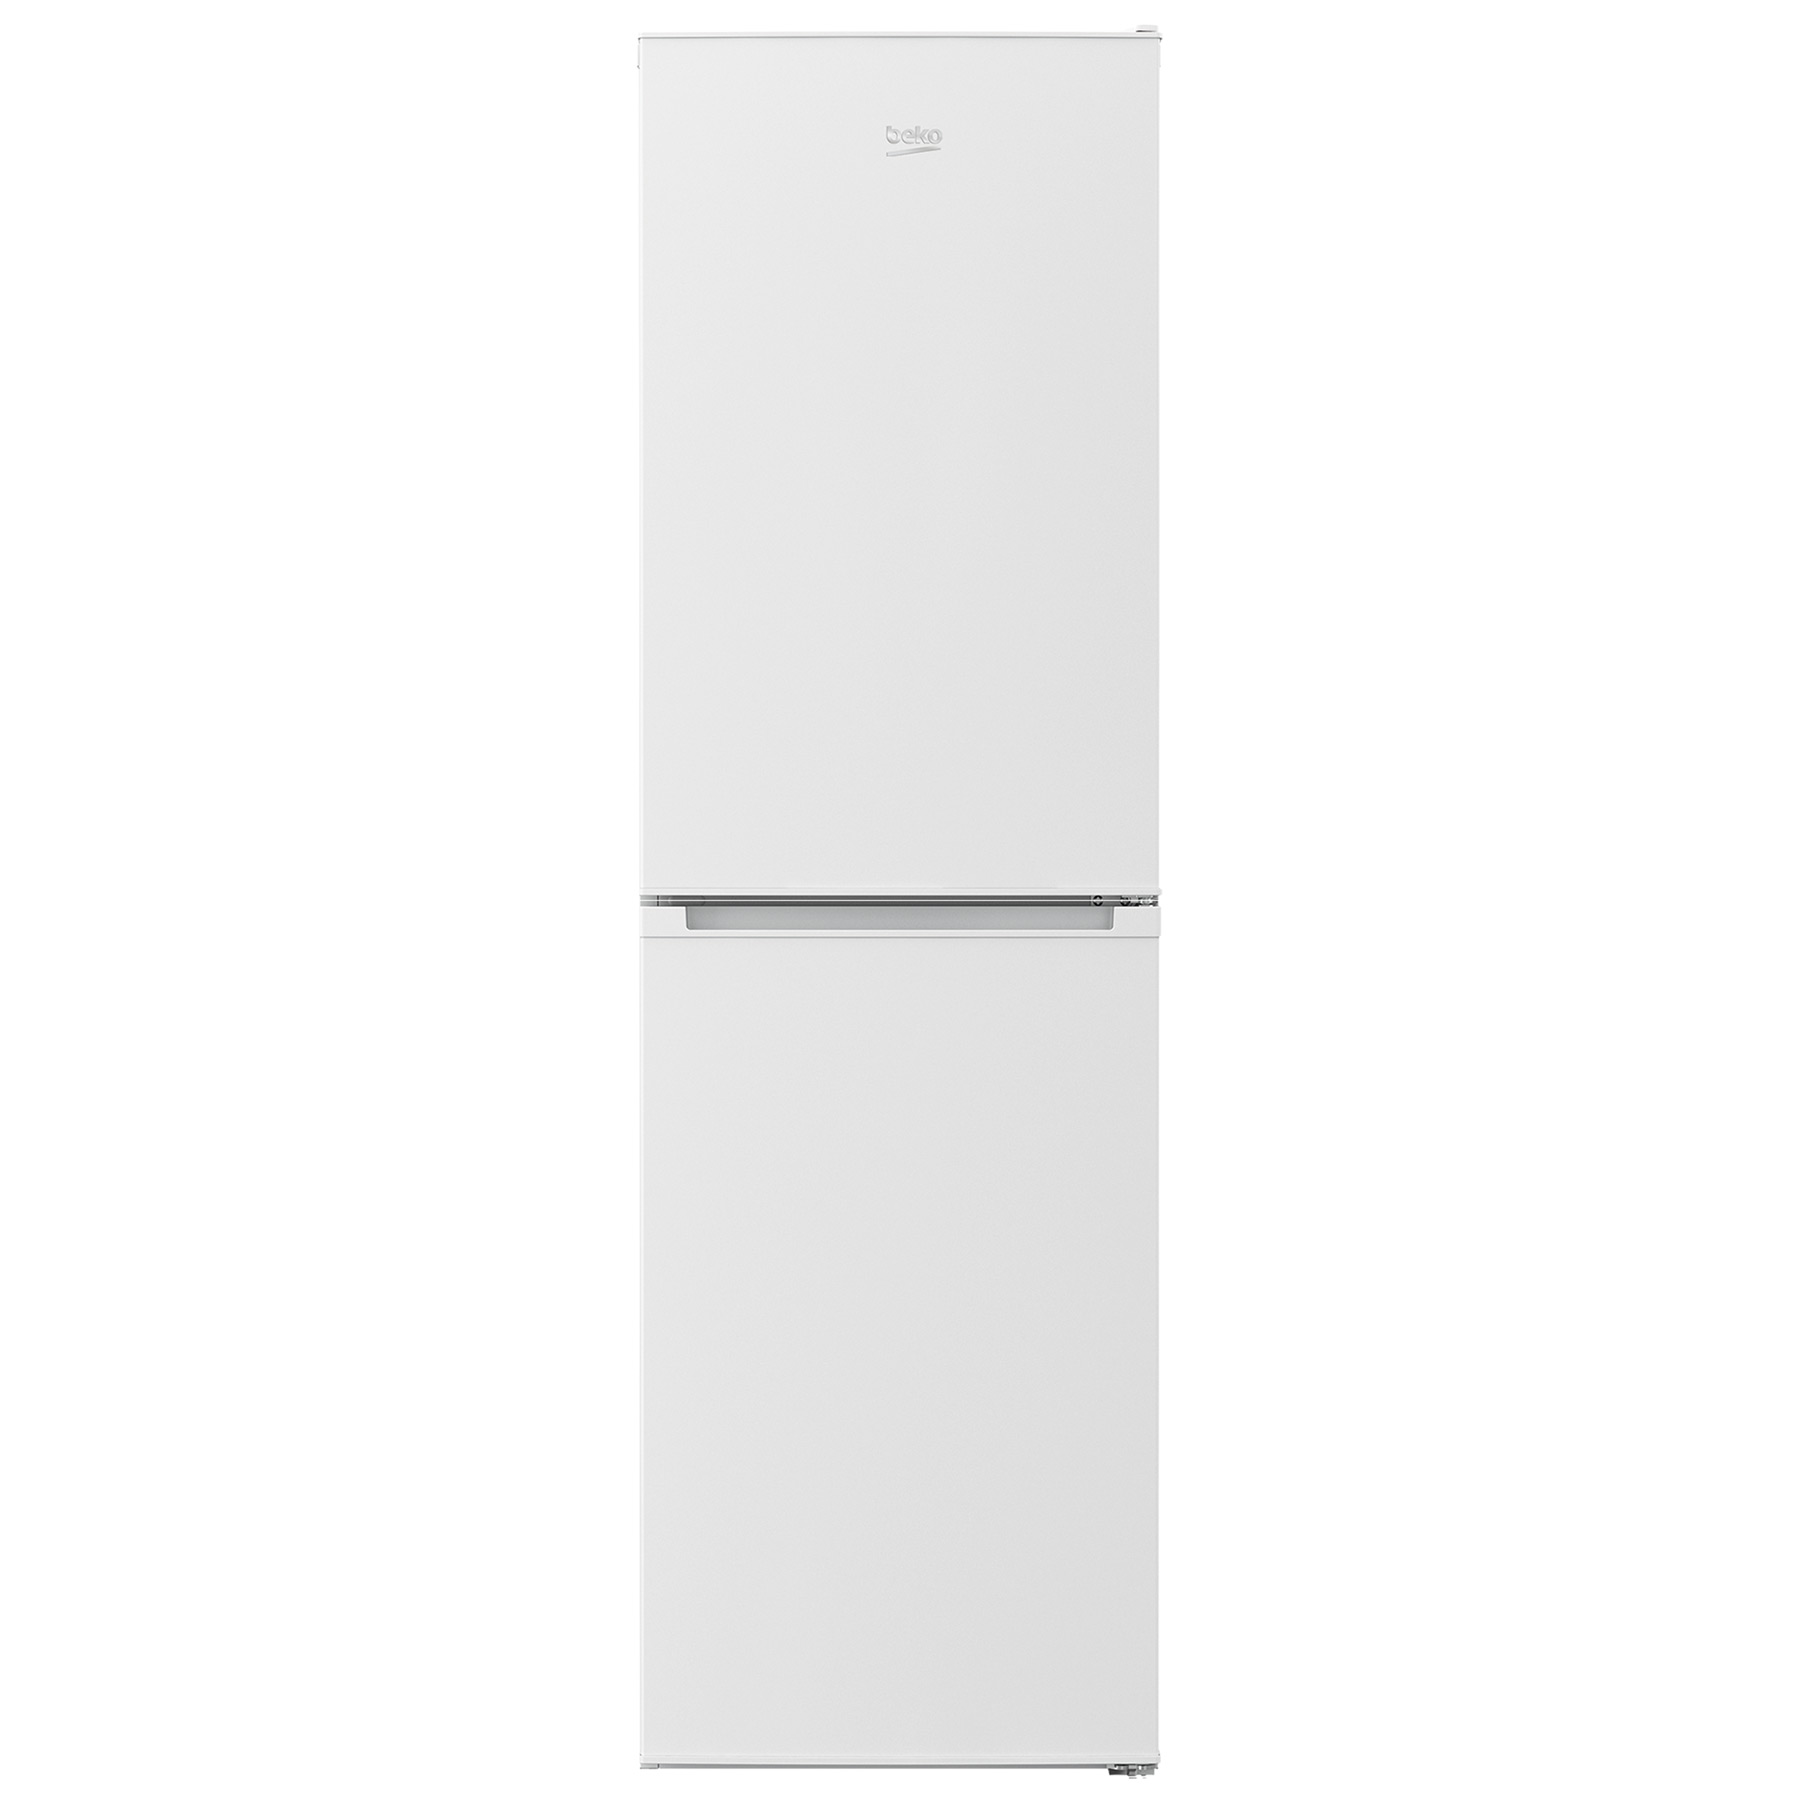 Image of Beko CCFM3582W 54cm Frost Free Fridge Freezer in White 1 82m F Rated